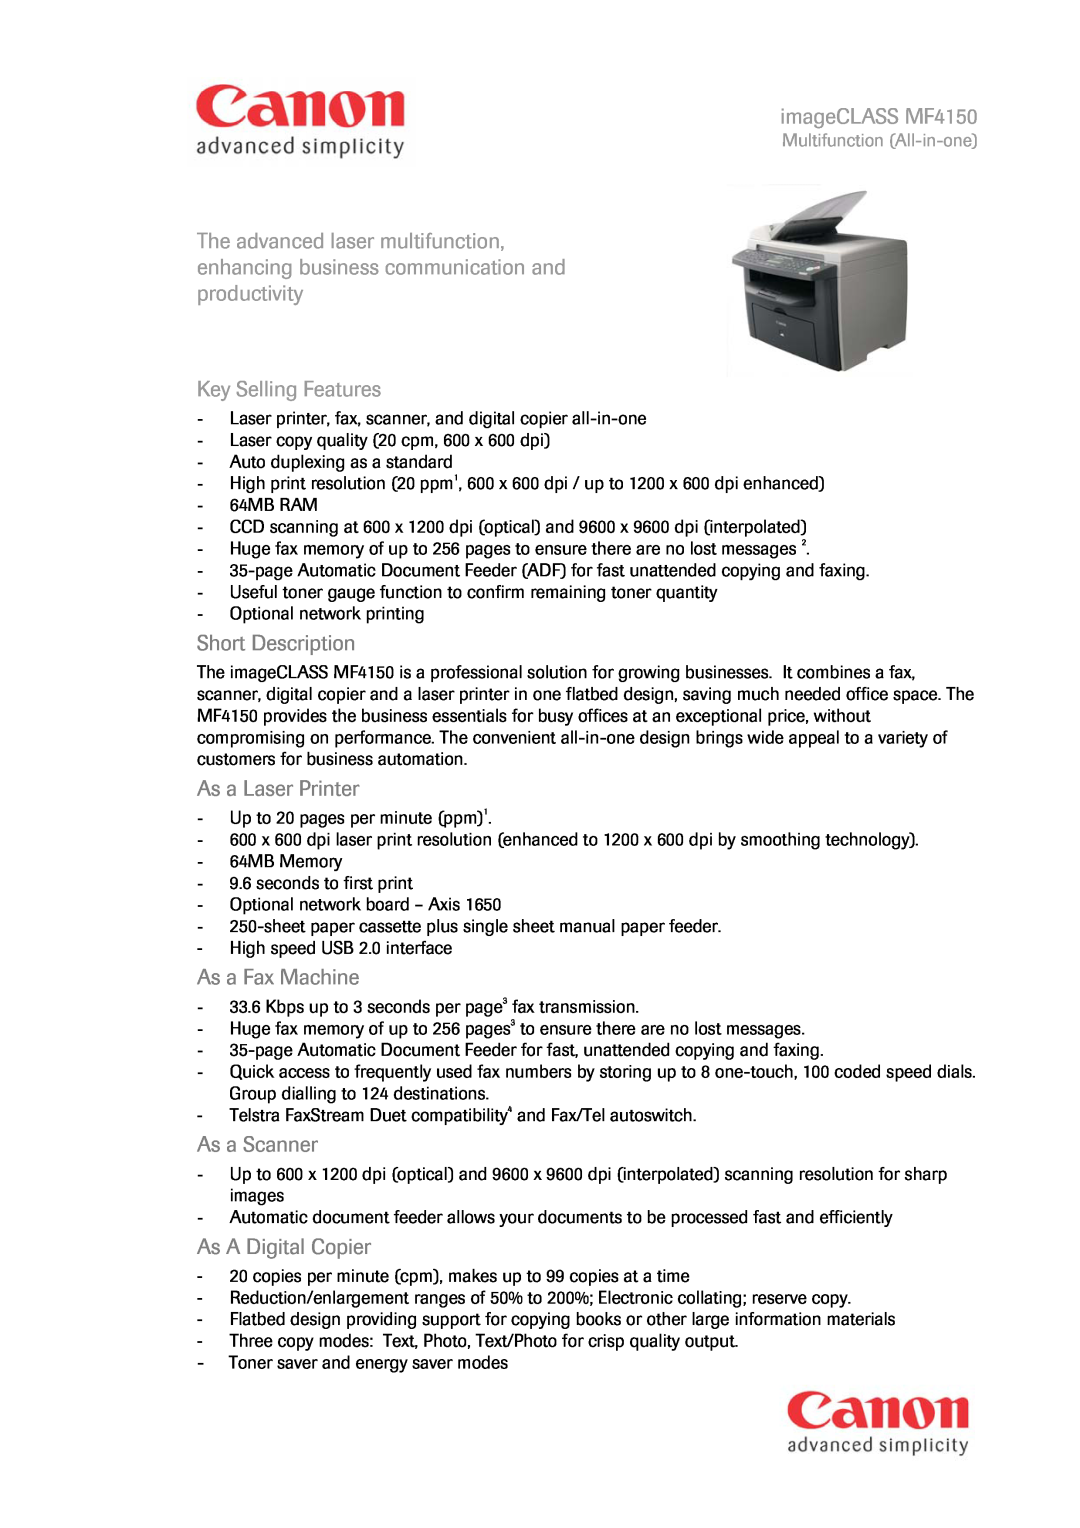 Canon MF4150 manual Short Description, As a Laser Printer, As a Fax Machine, As a Scanner, As A Digital Copier 